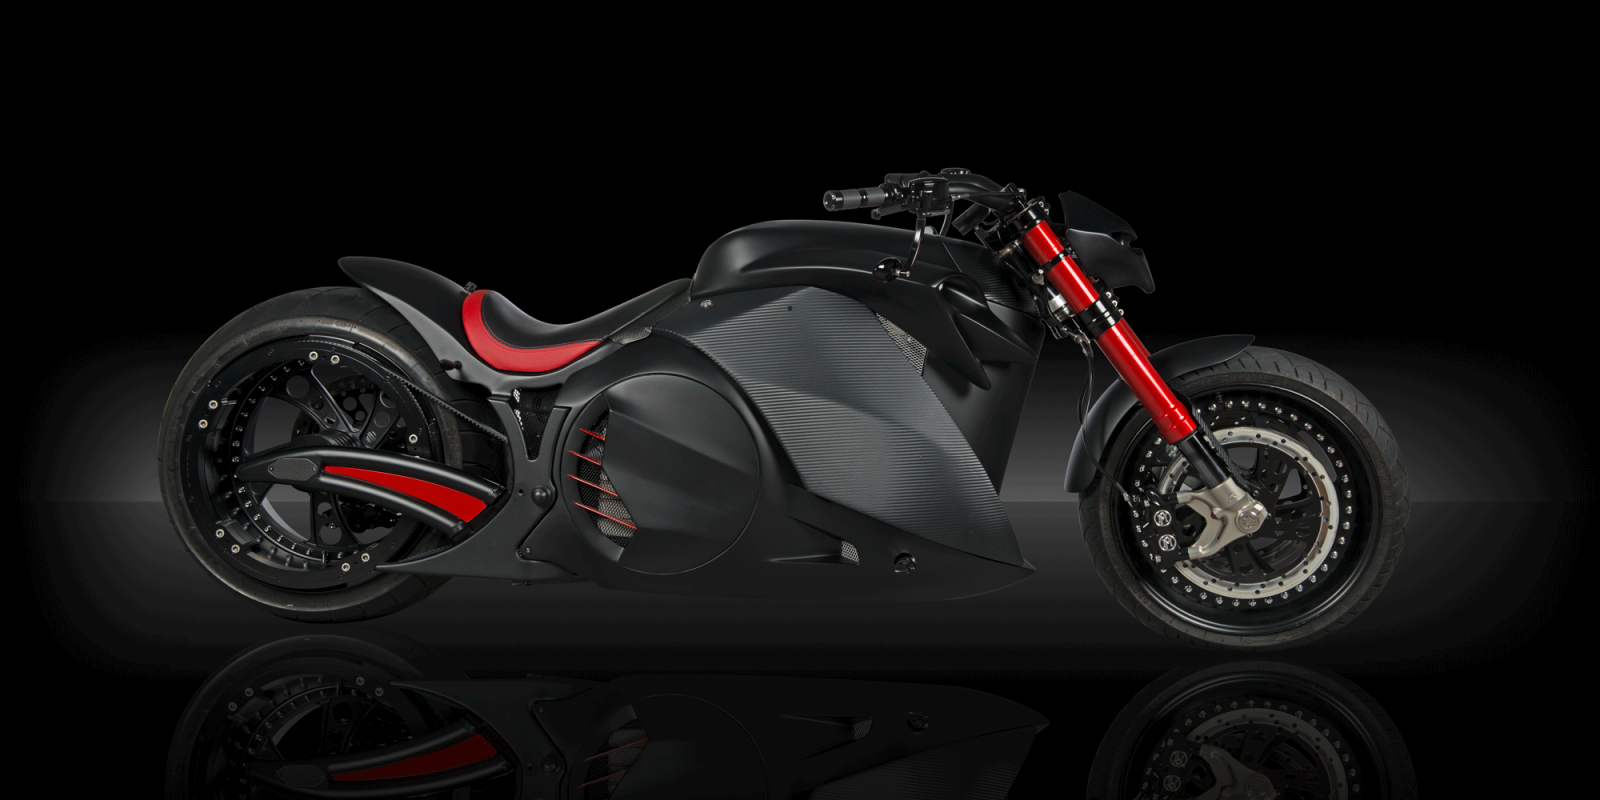 Powerful High Speed Sports Bike Motorcycle Automatic Chopper